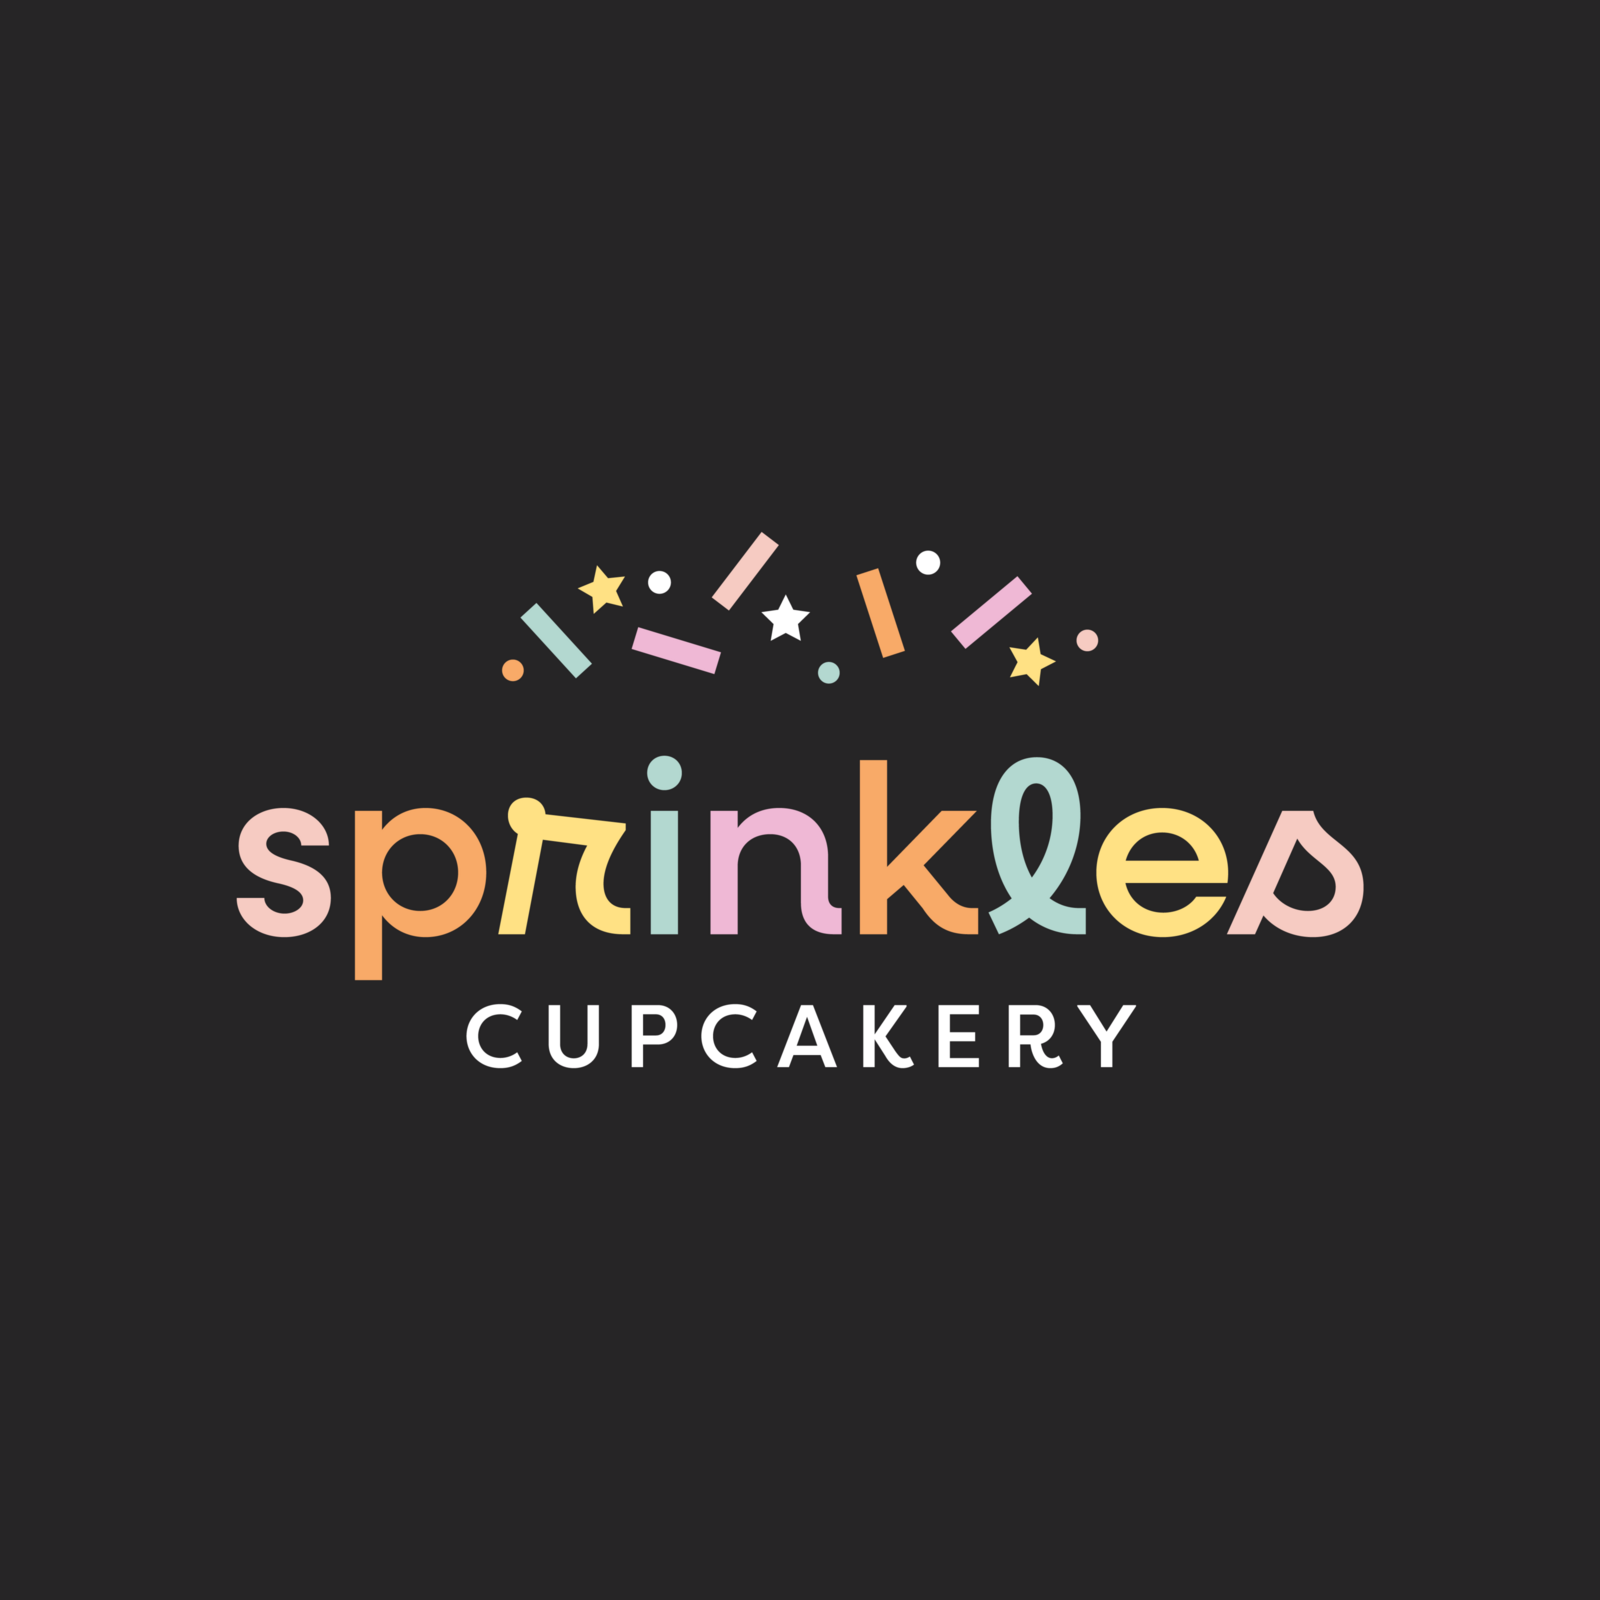 Sprinkles Cupcakery Logo